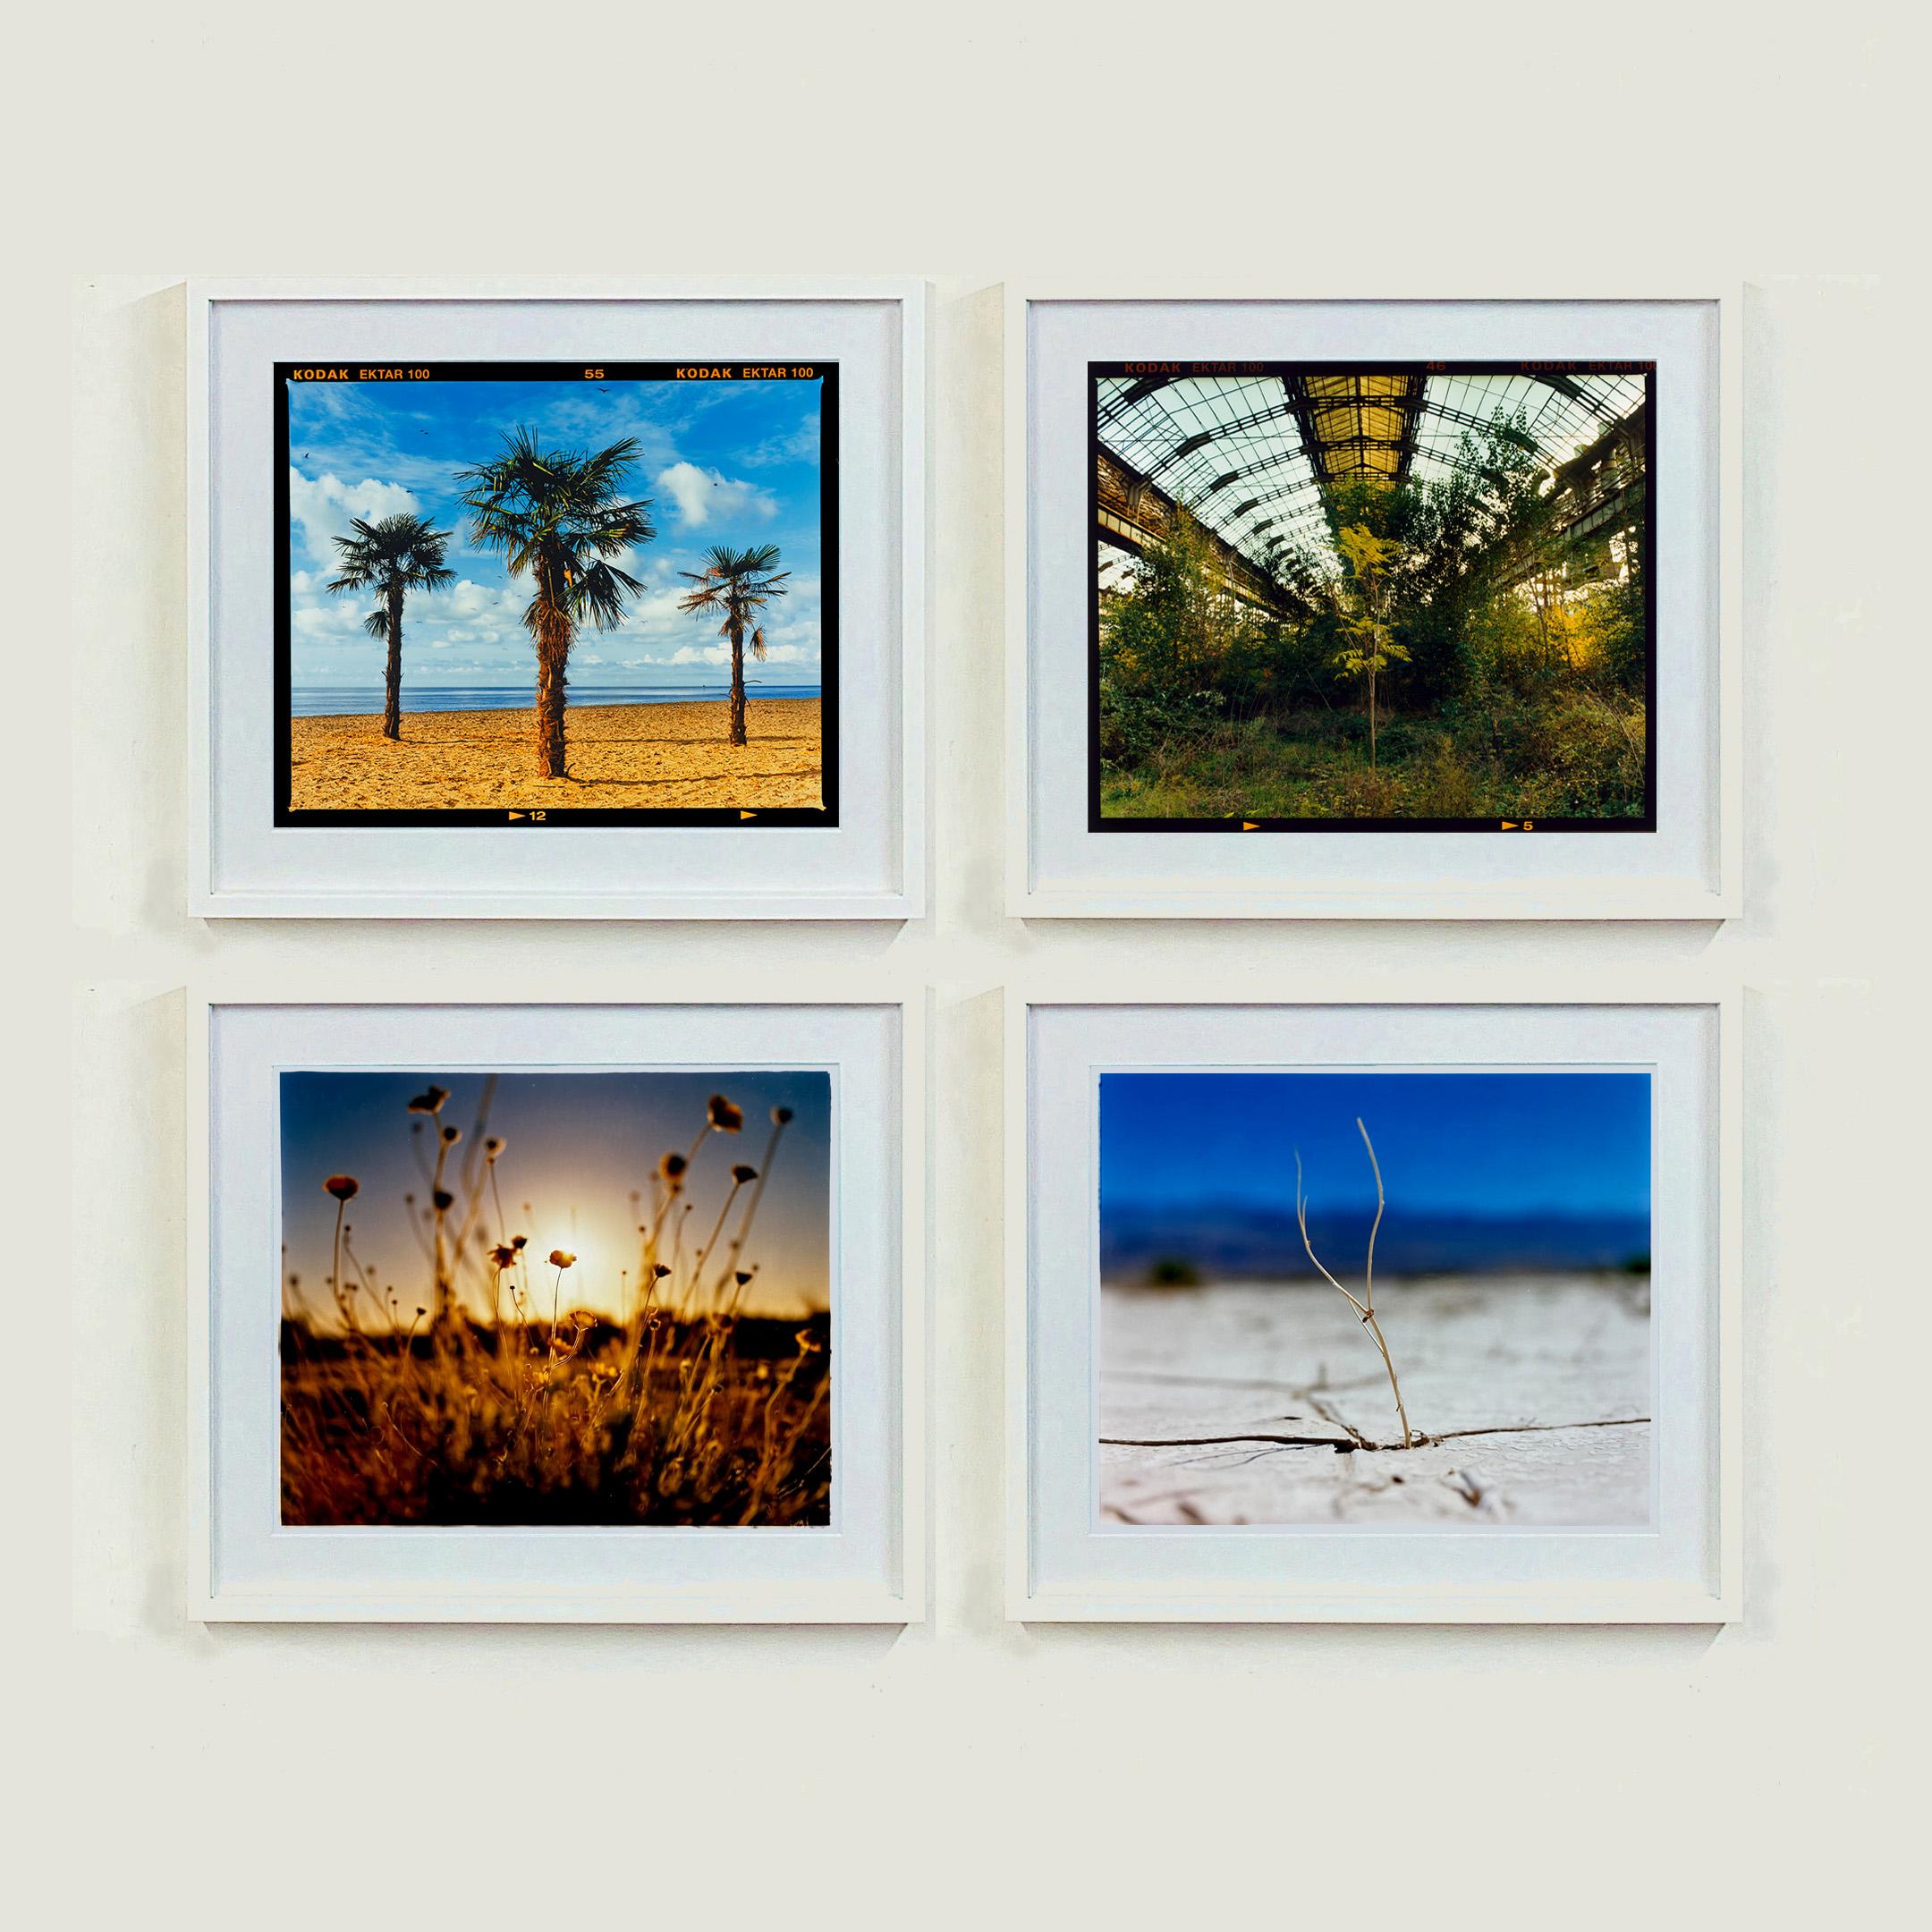 Richard Heeps Landscape Photograph - Four Framed Nature Photographs 